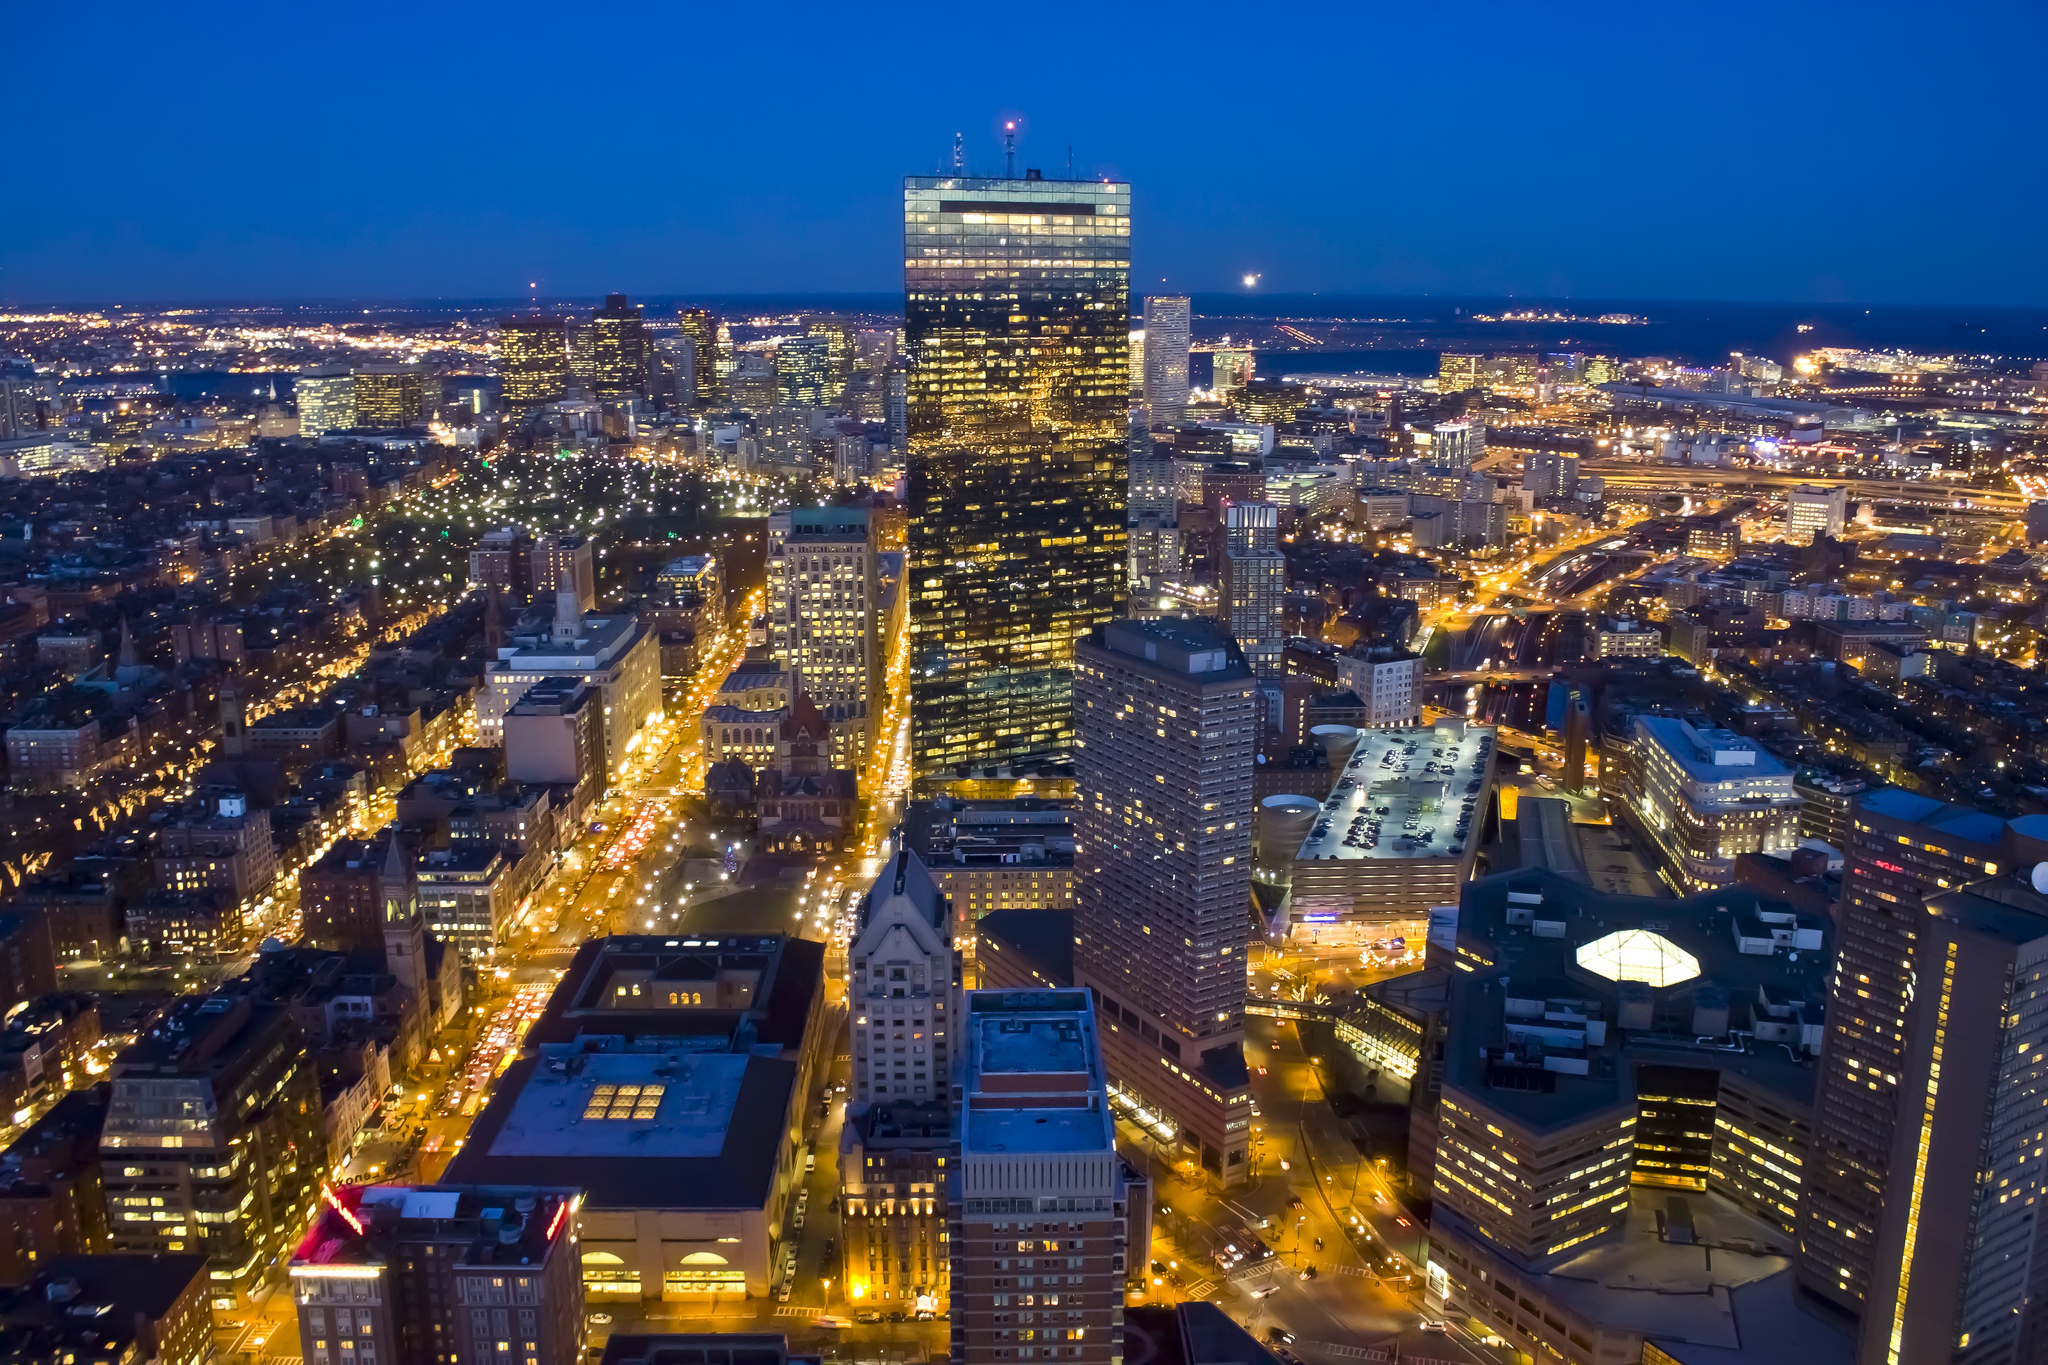 Popular Boston Image for Phone